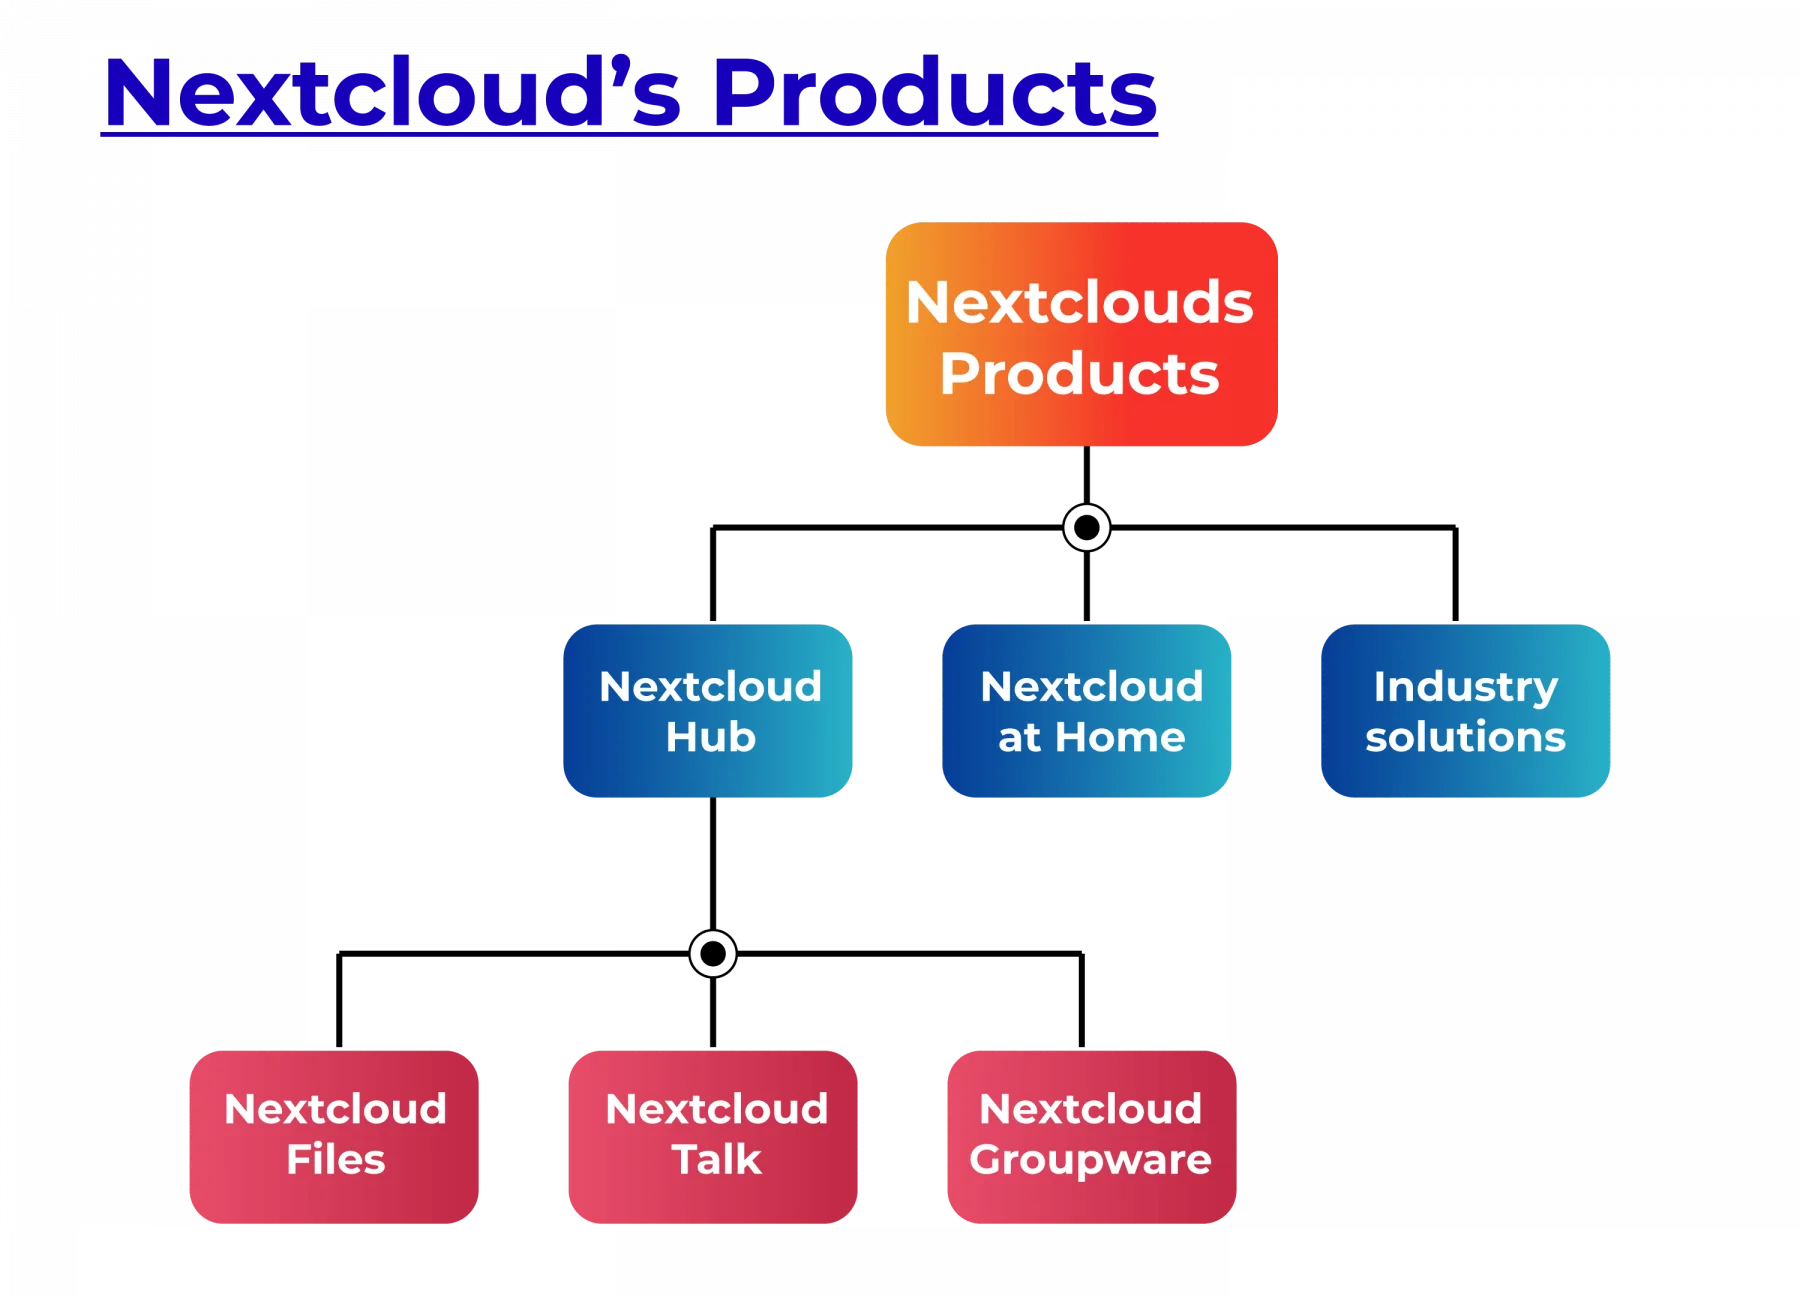 Nextcloud’s Products